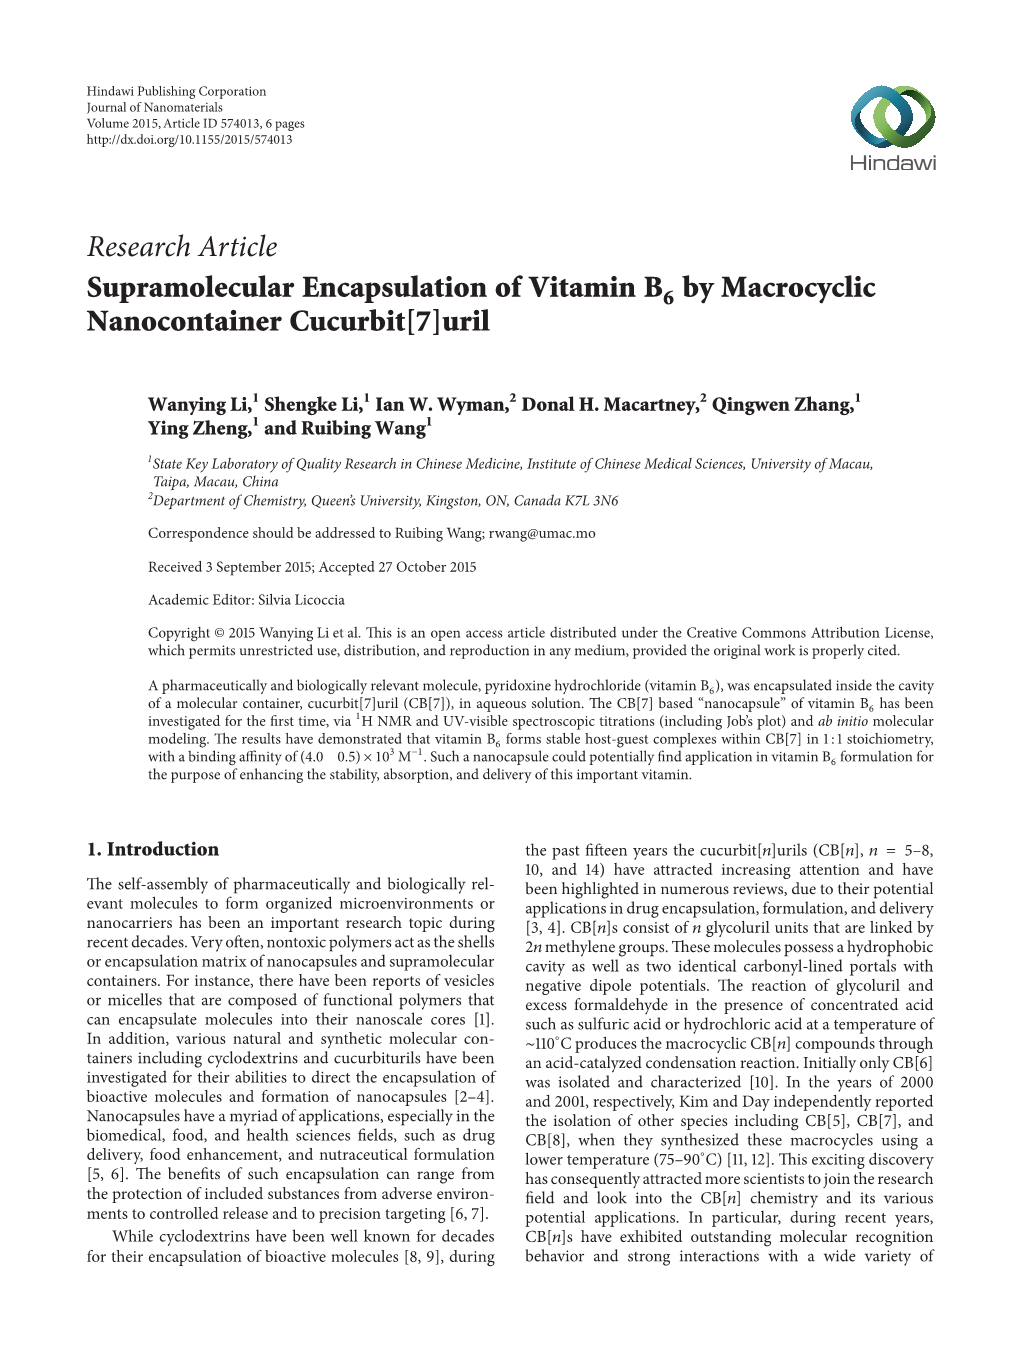 Supramolecular Encapsulation of Vitamin B6 by Macrocyclic Nanocontainer Cucurbit[7]Uril